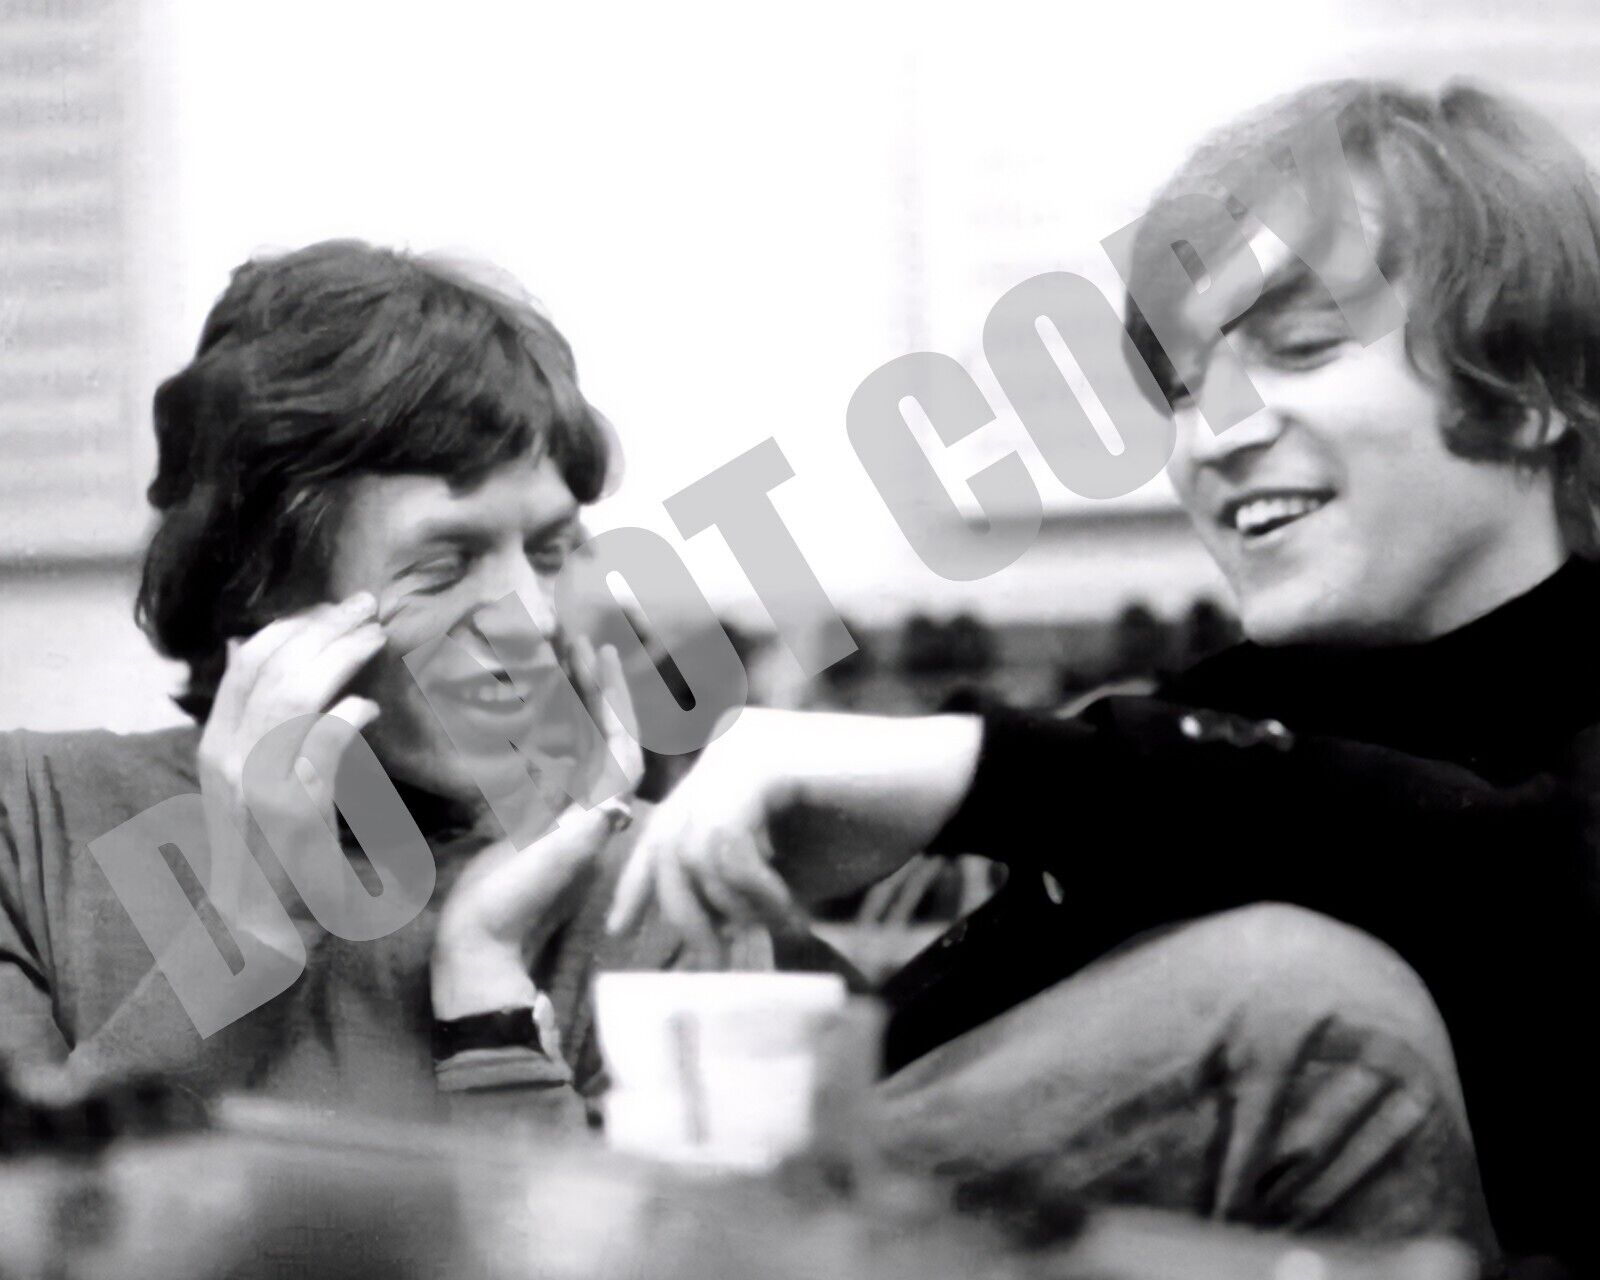 Mick Jagger Rolling Stones John Lennon Beatles Having Coffee 8x10 Photo